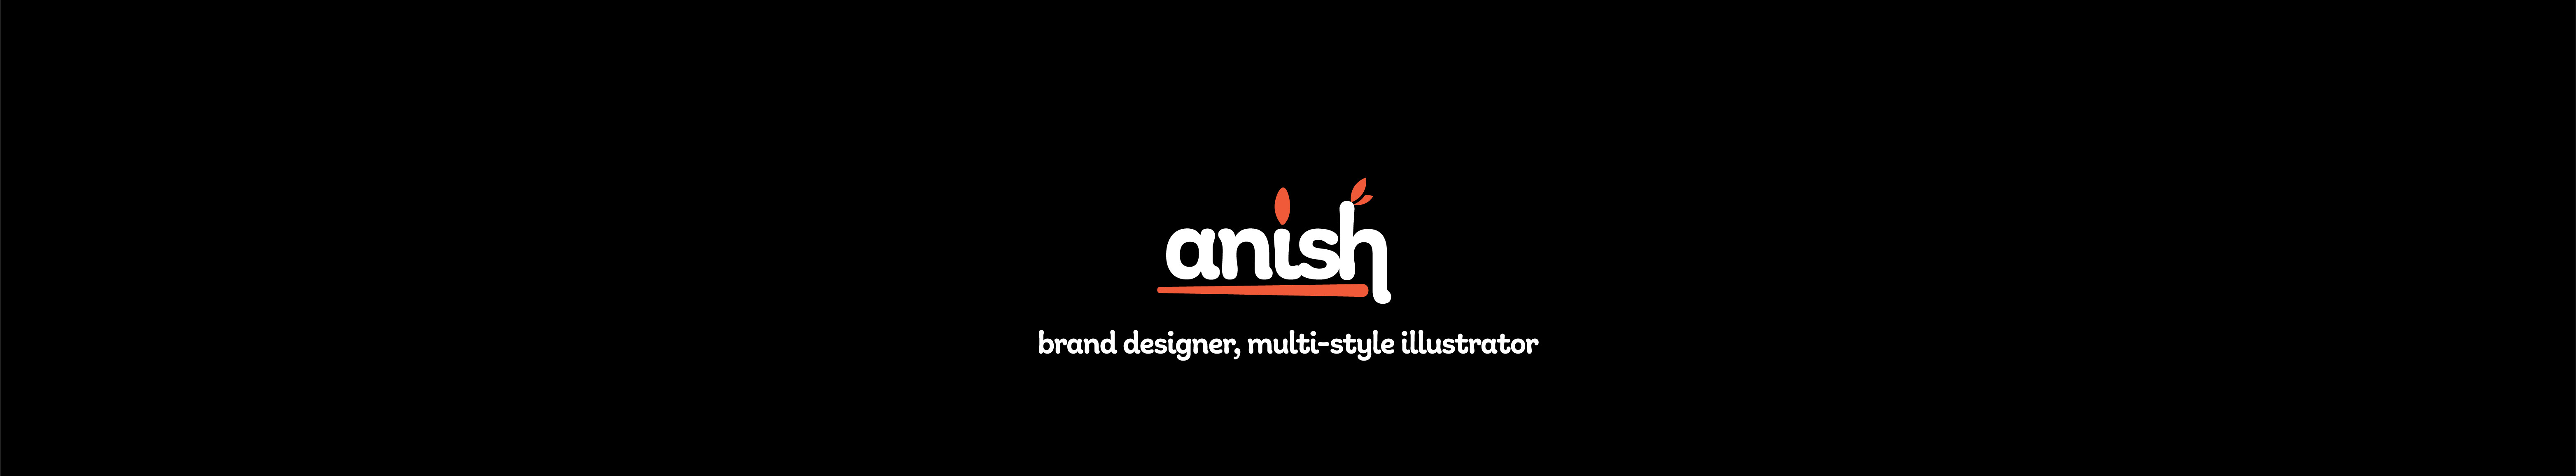 Anish G's profile banner